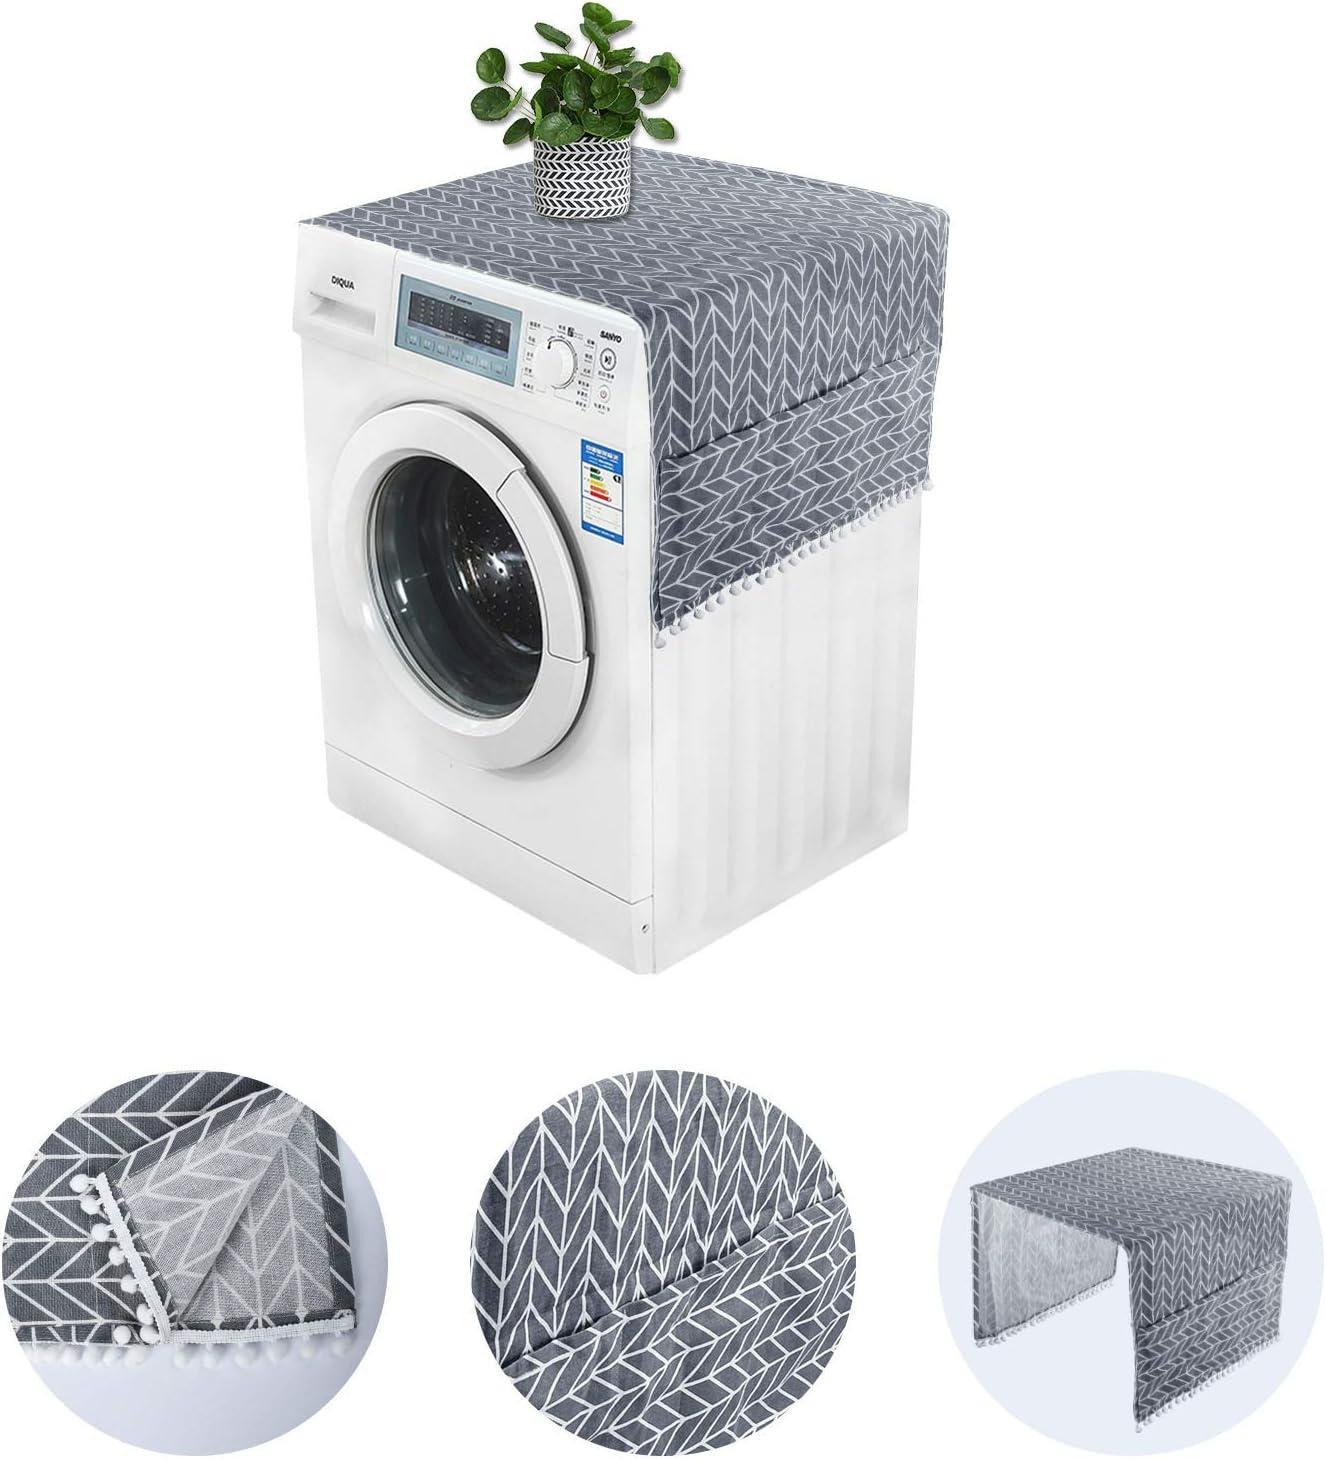 Fridge Cover, Washing Machine Cover, Washing Machine Protector, Washing Machine Dust Cover with Stor